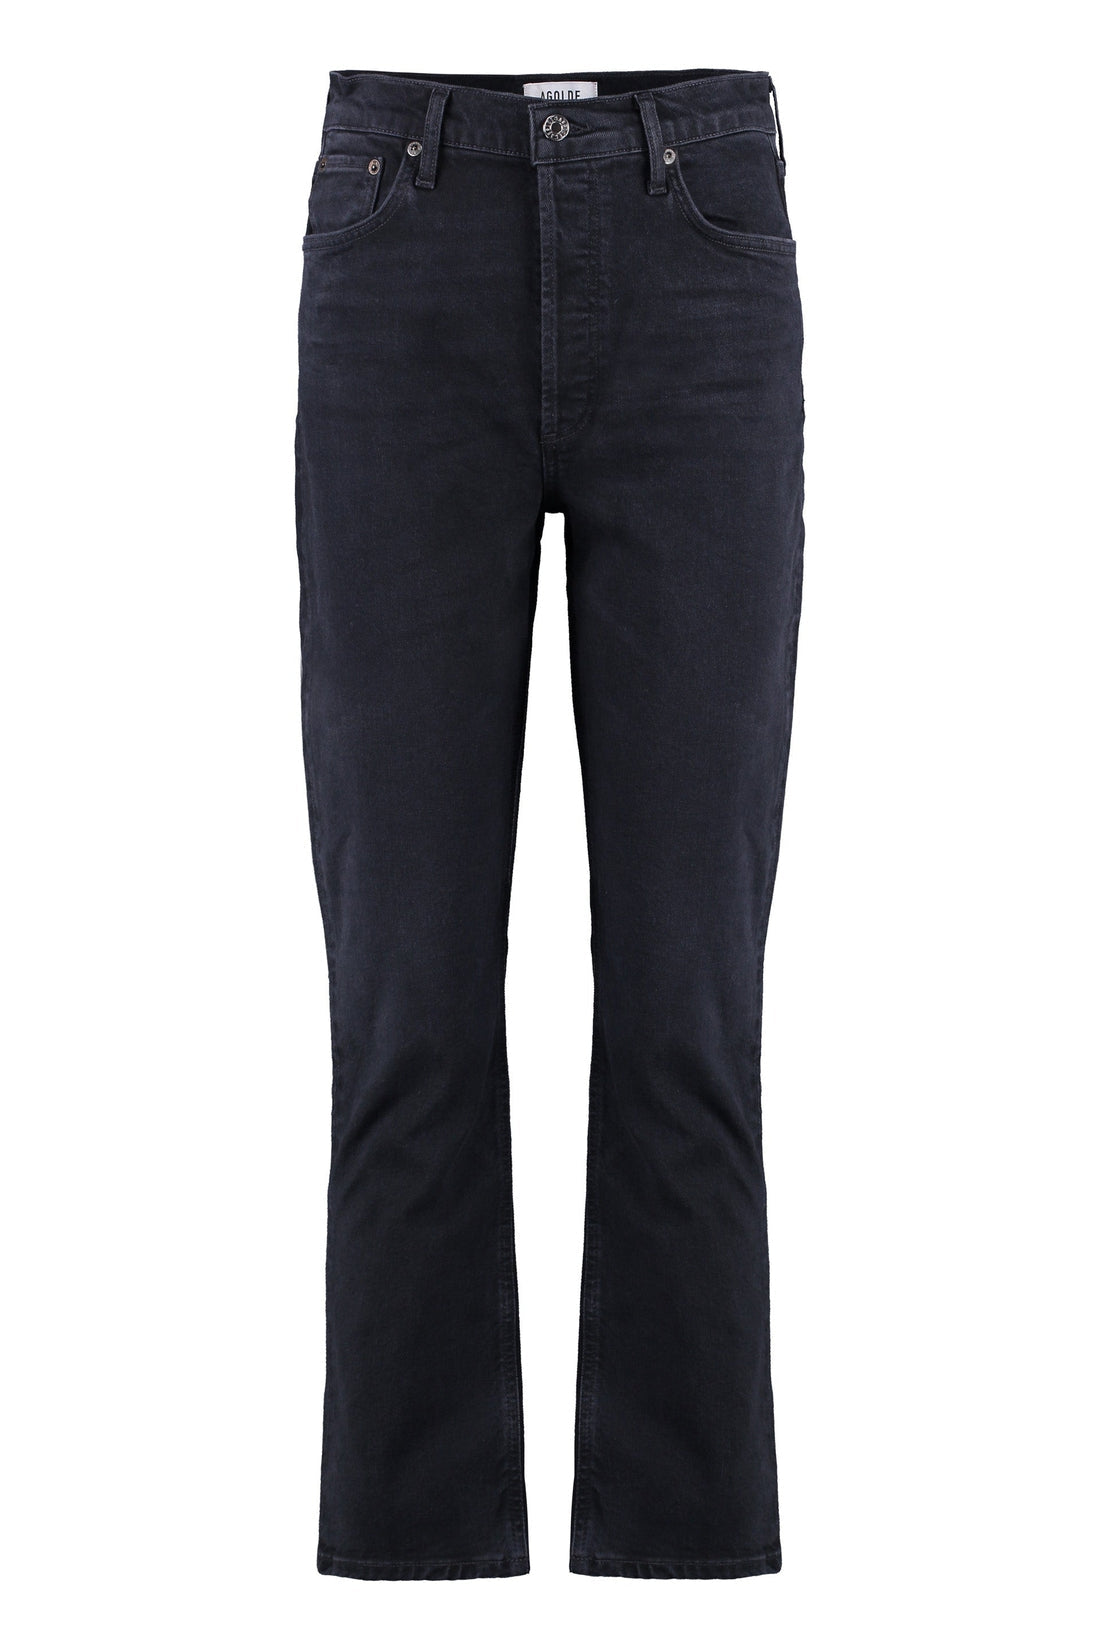 AGOLDE-OUTLET-SALE-Riley Long 5-pocket straight-leg jeans-ARCHIVIST